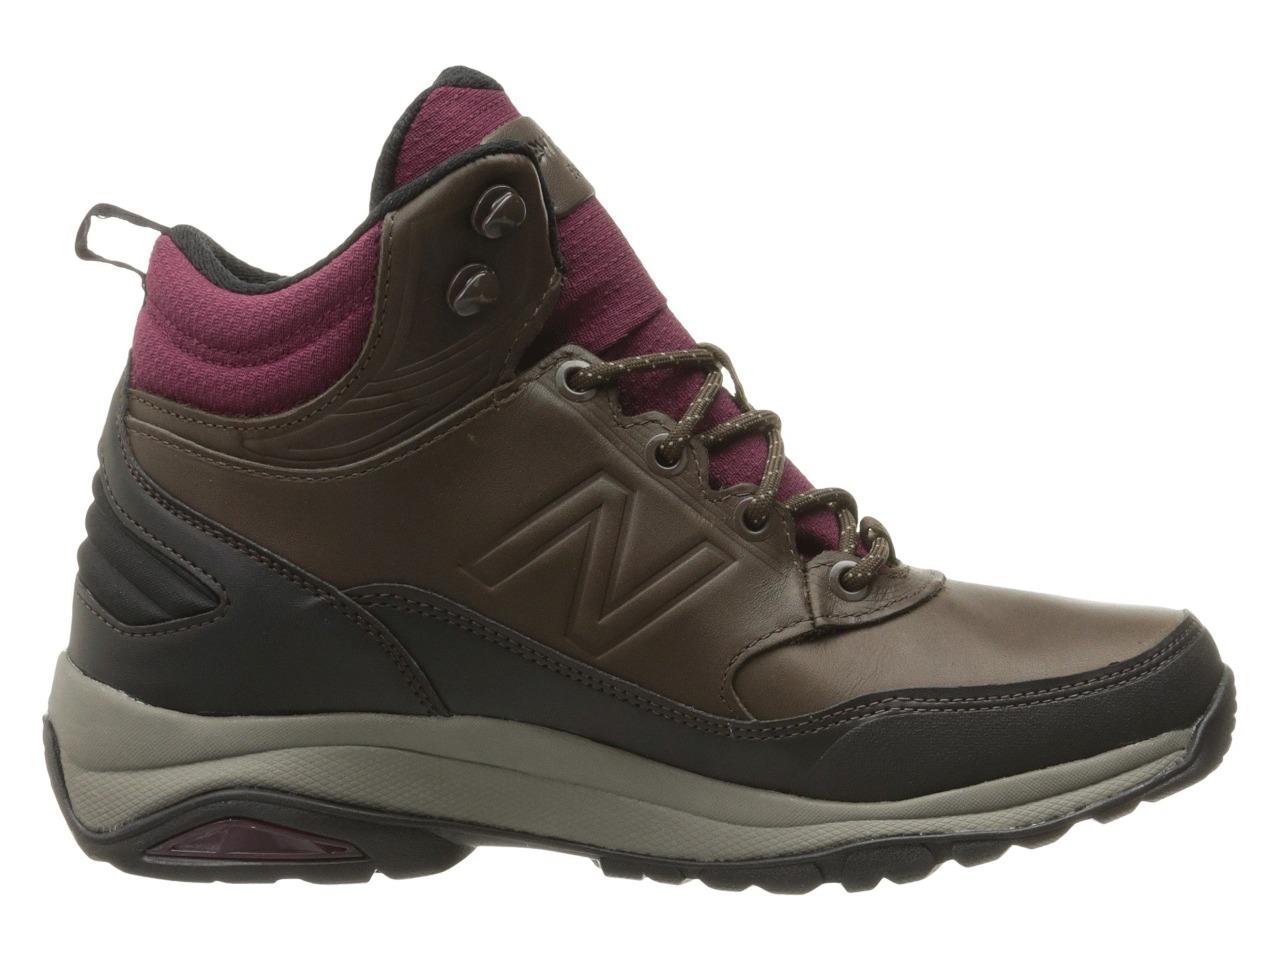 New Women's New Balance 1400 WW1400v1 Waterproof Hiking Boots Size 5.5 ...